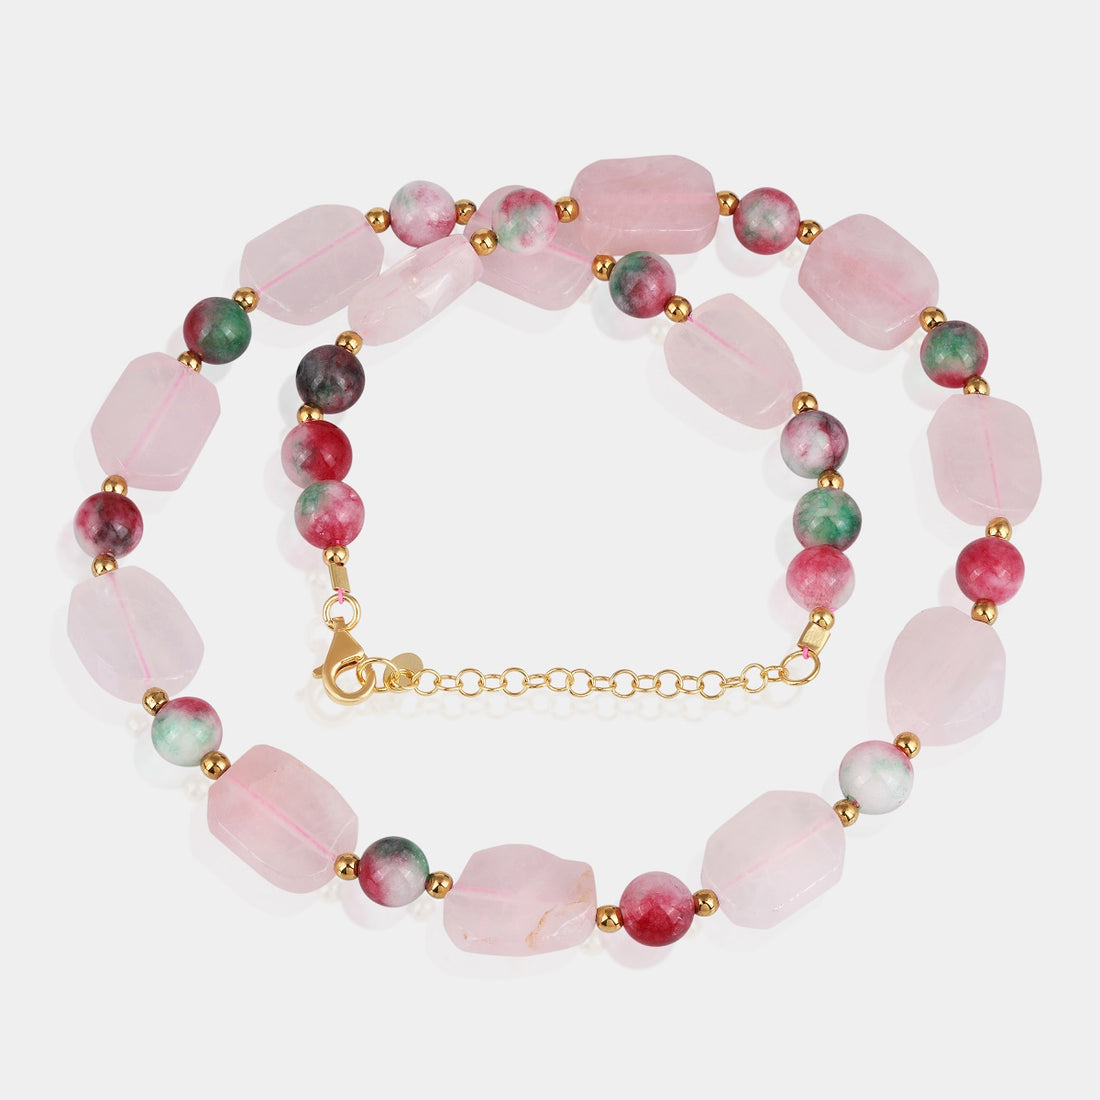 Natural Gemstone Jewelry with Rose Quartz, Strawberry Dyed Quartz, and Hematite